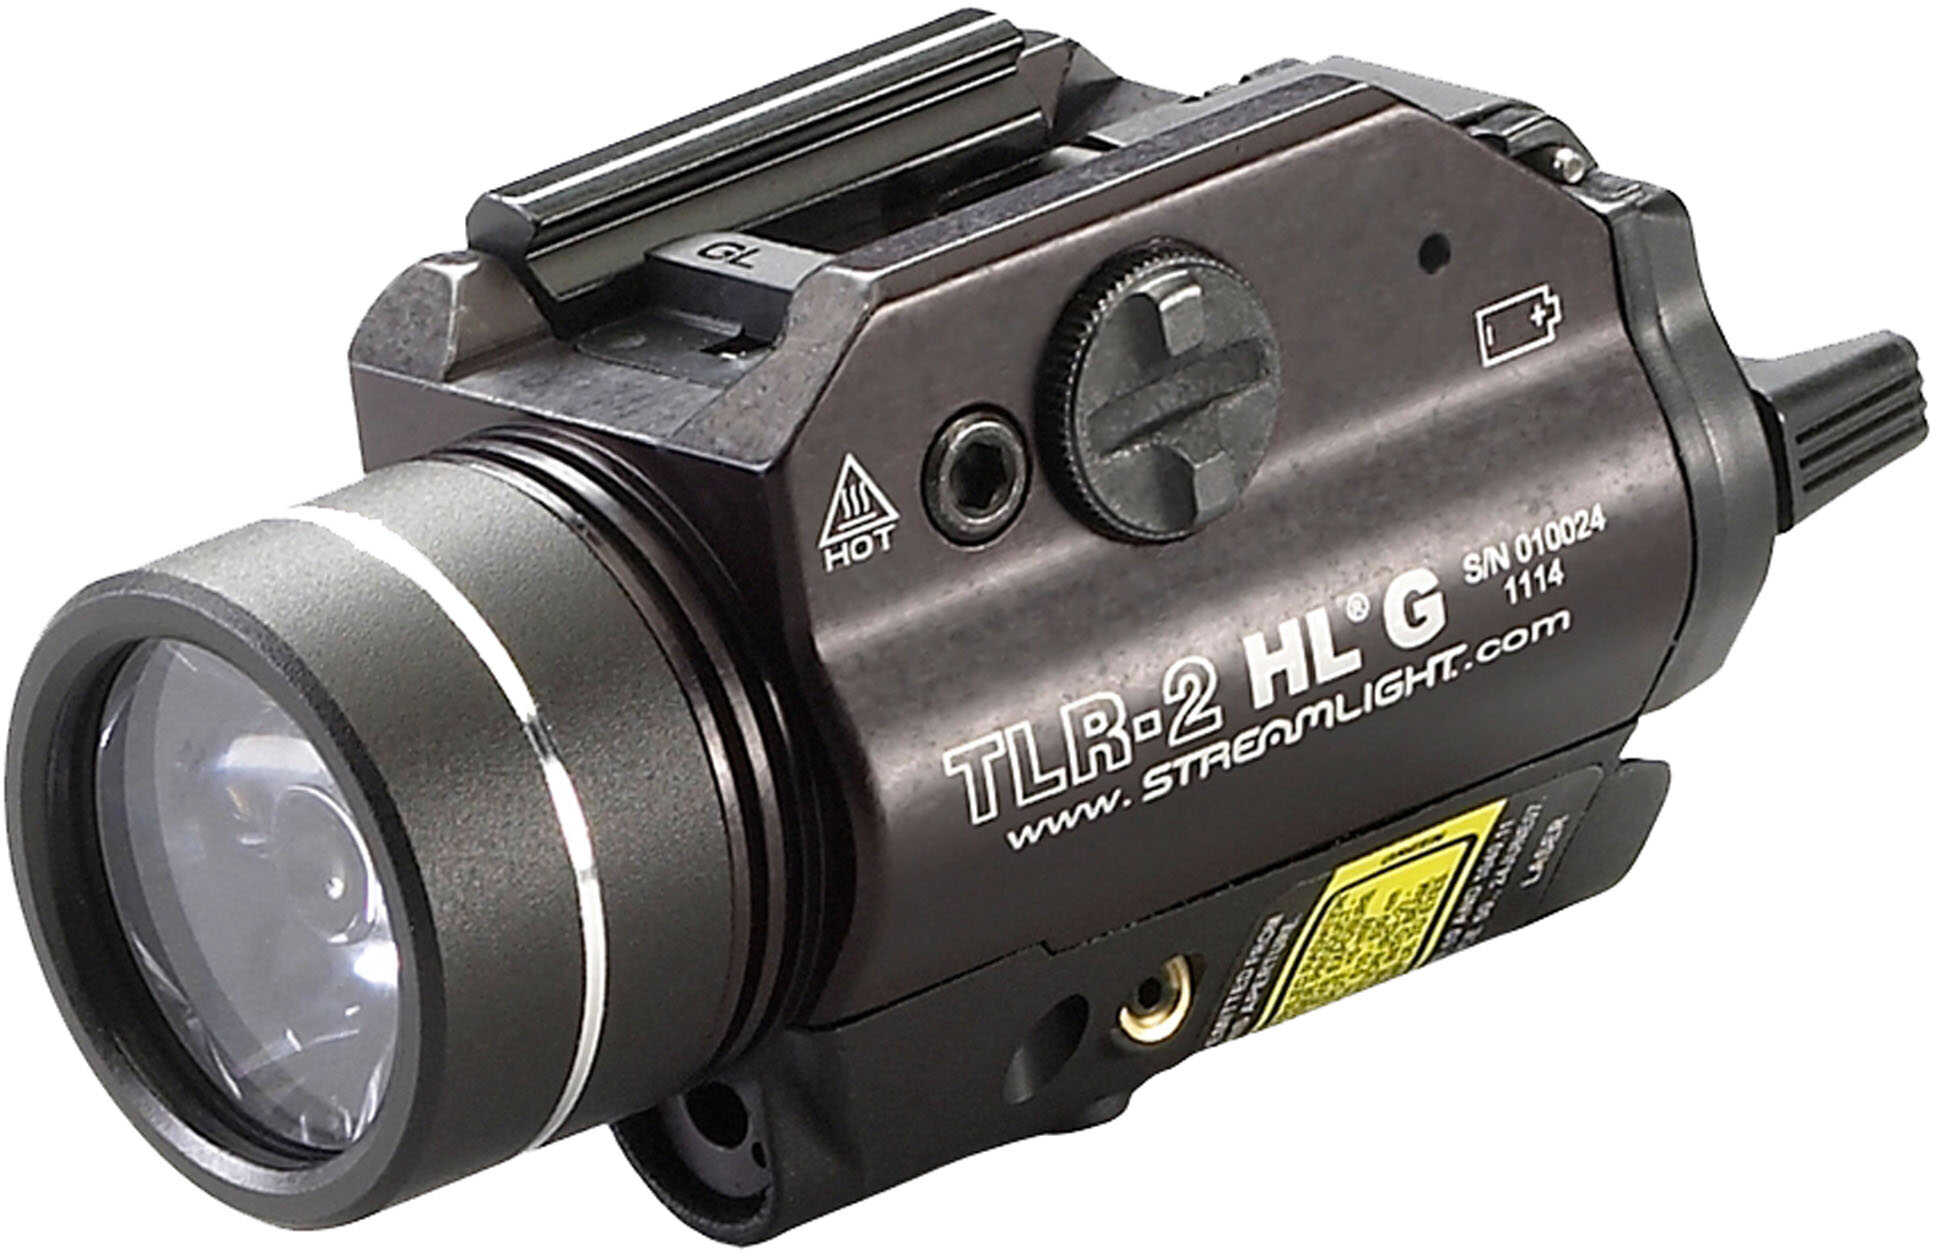 Streamlight TLR-2HL-G Mounted Rail Flashlight w- Green Laser